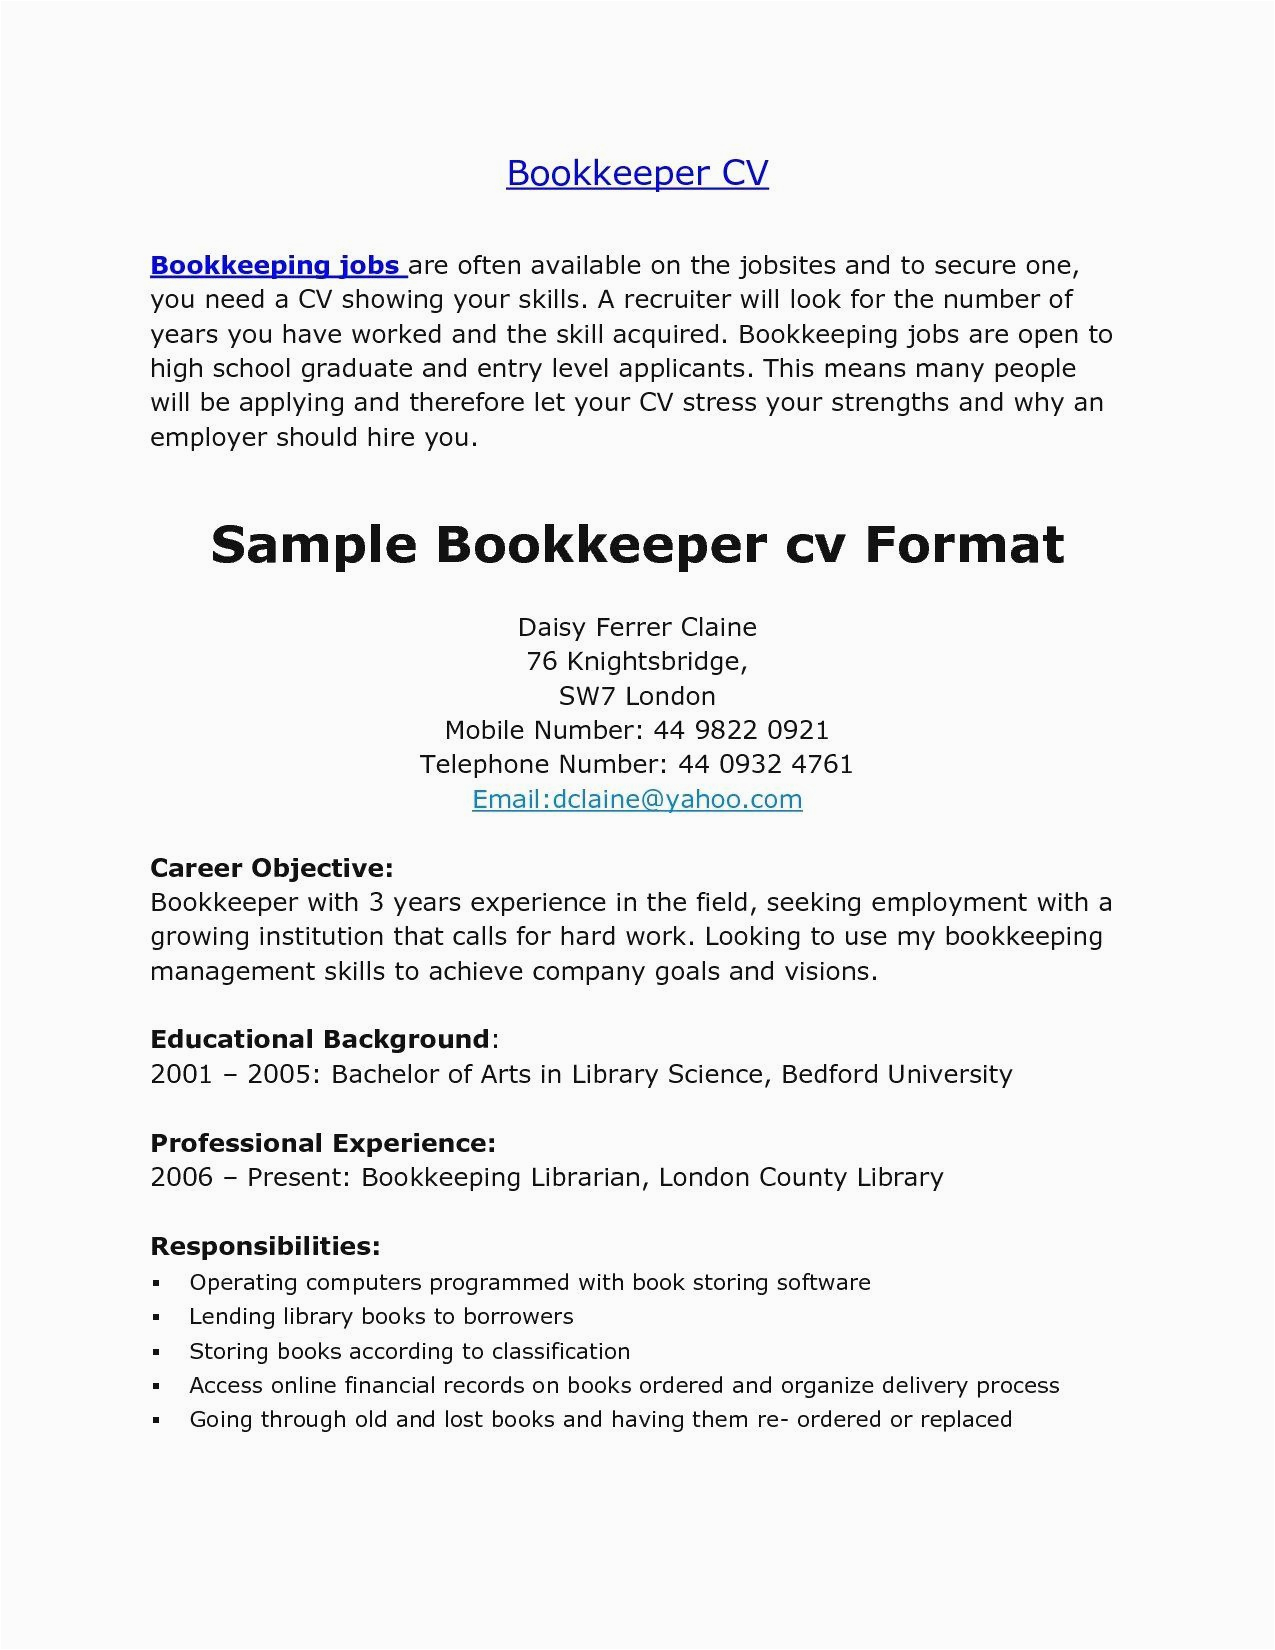 Sample Resume for Entry Level Bookkeeper Entry Level Bookkeeper Resume Sample Best Resume Examples